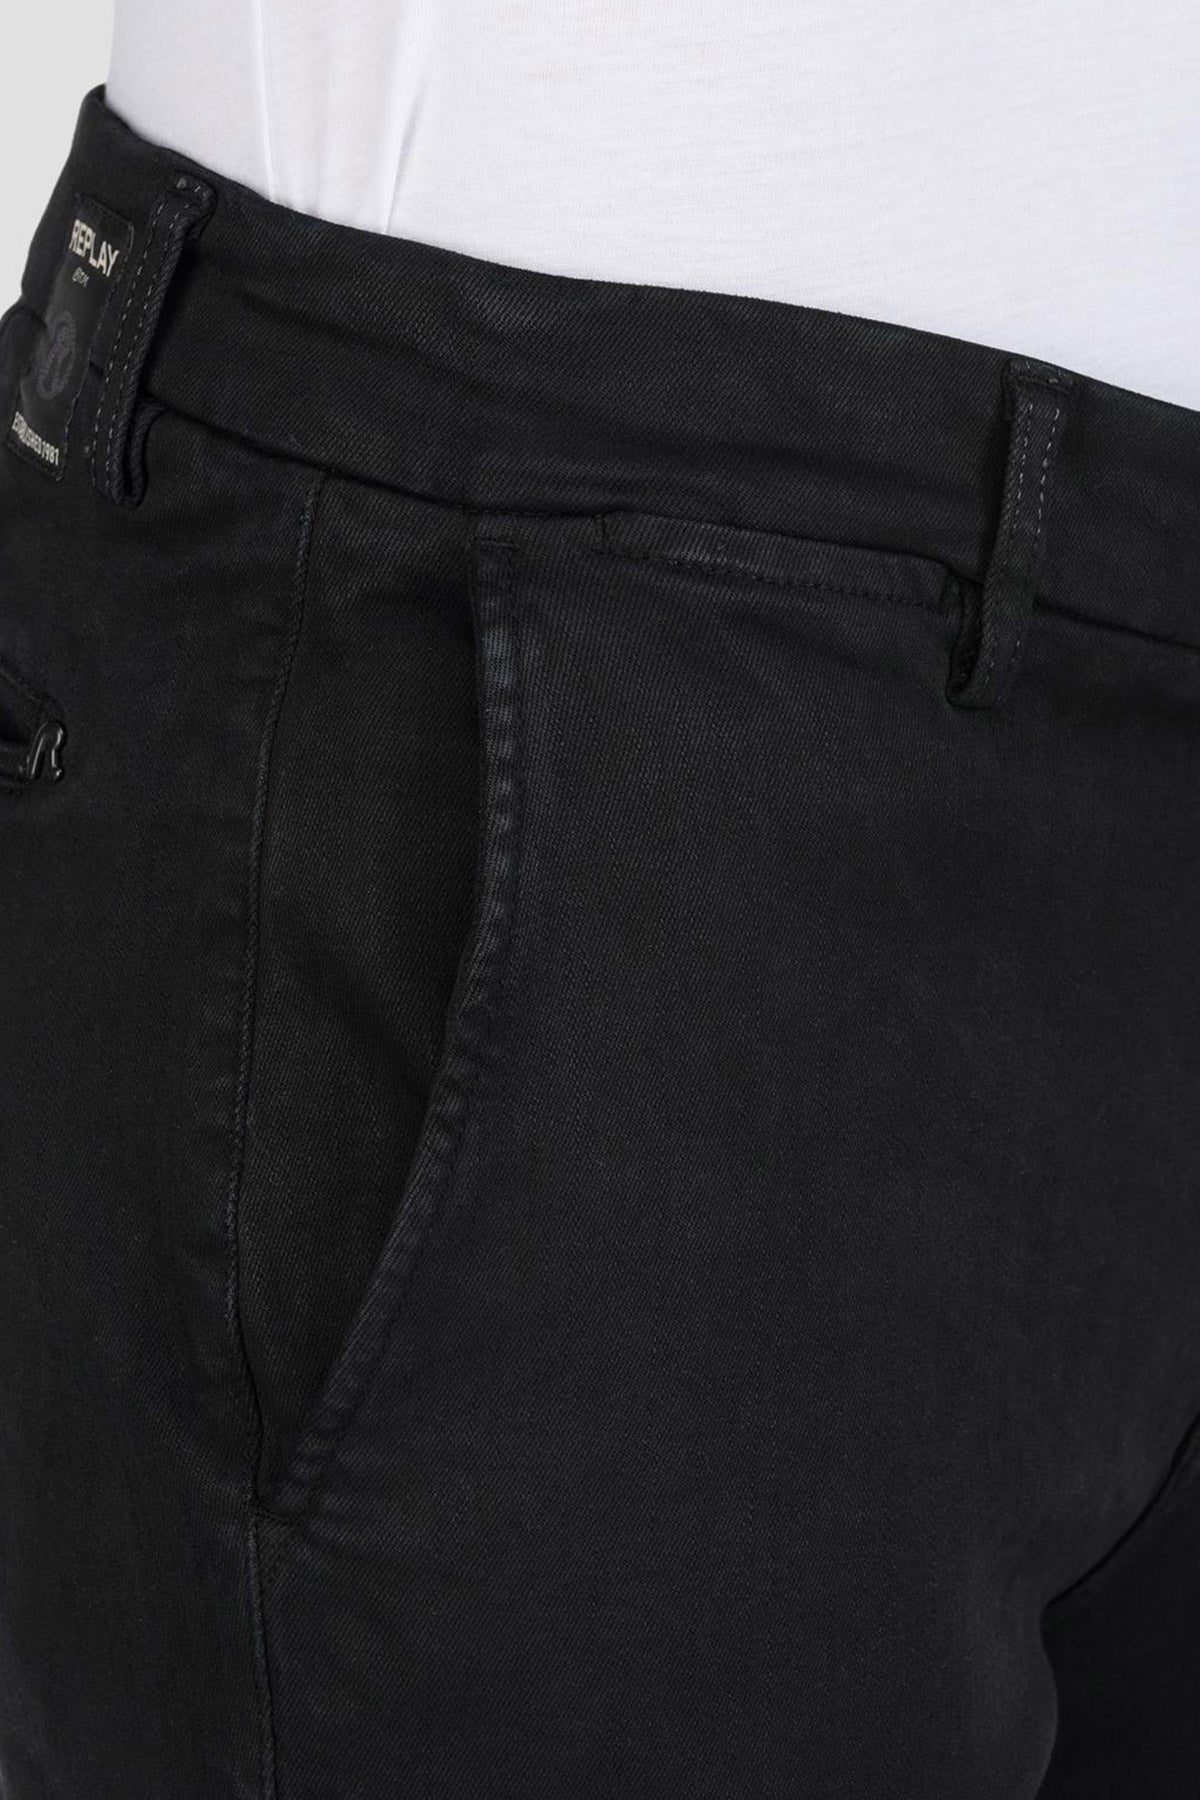 Replay Hyperflex Zeumar Slim Fit Jeans-Libas Trendy Fashion Store